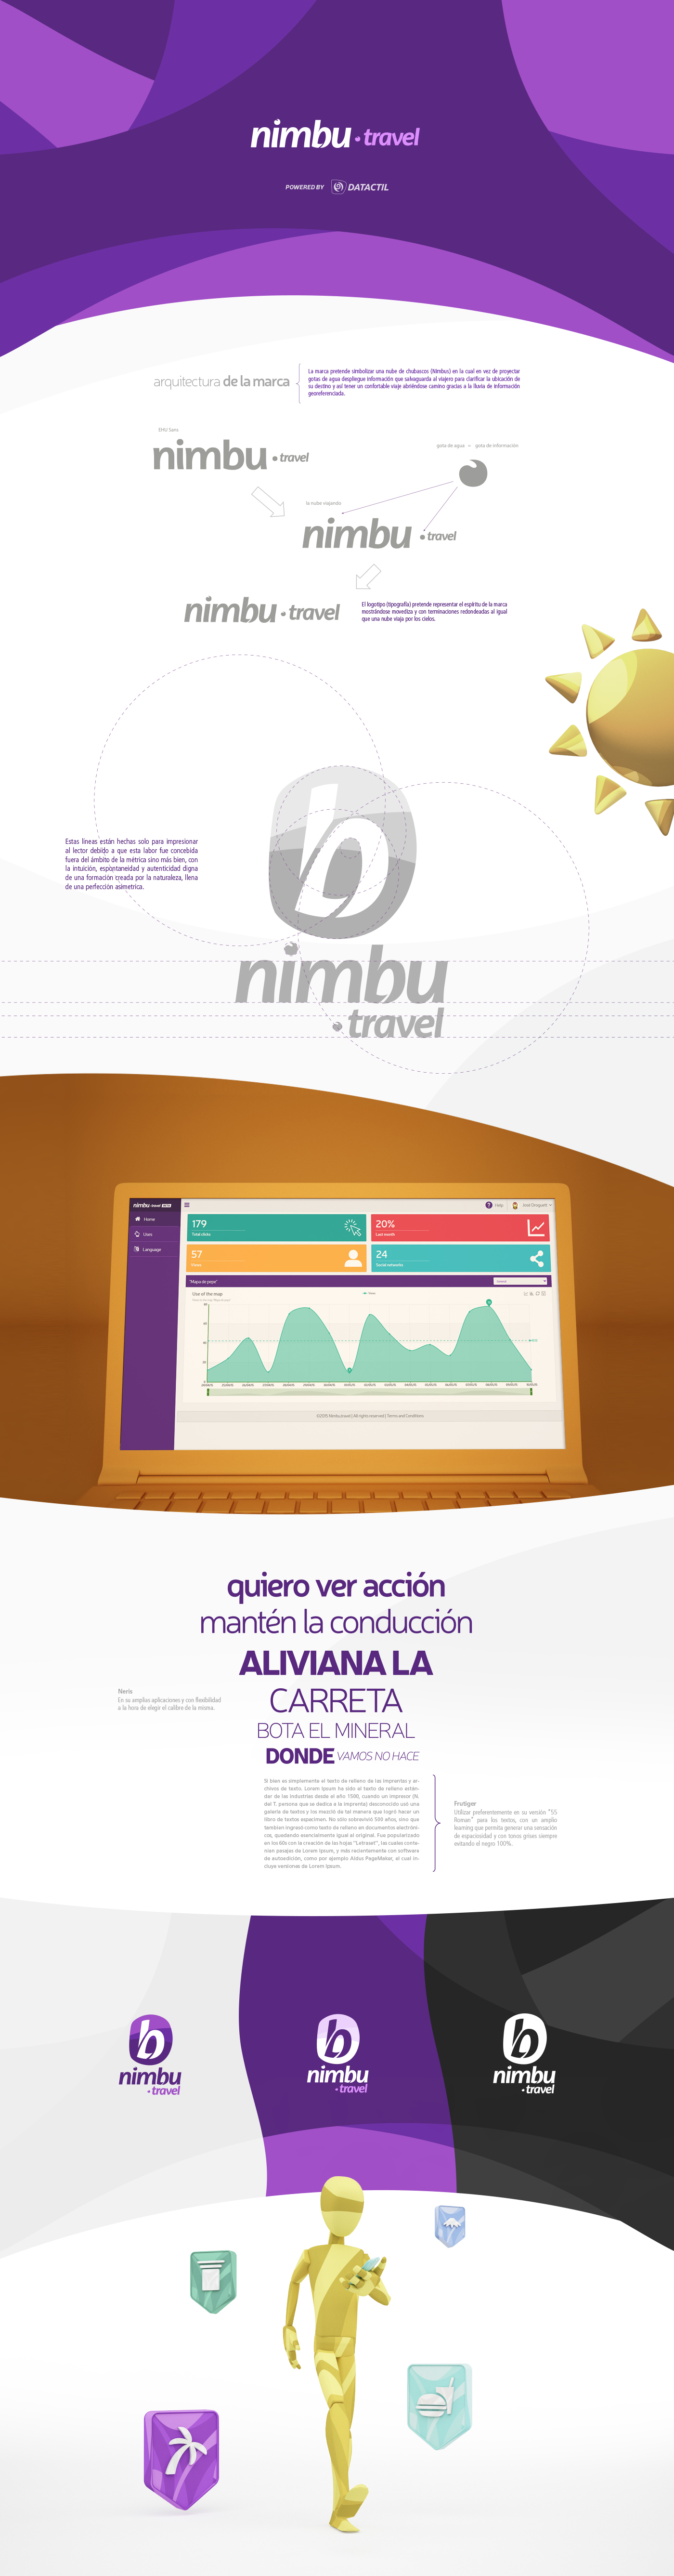 chile nimbu Travel Datactil corporative viaje app mobil